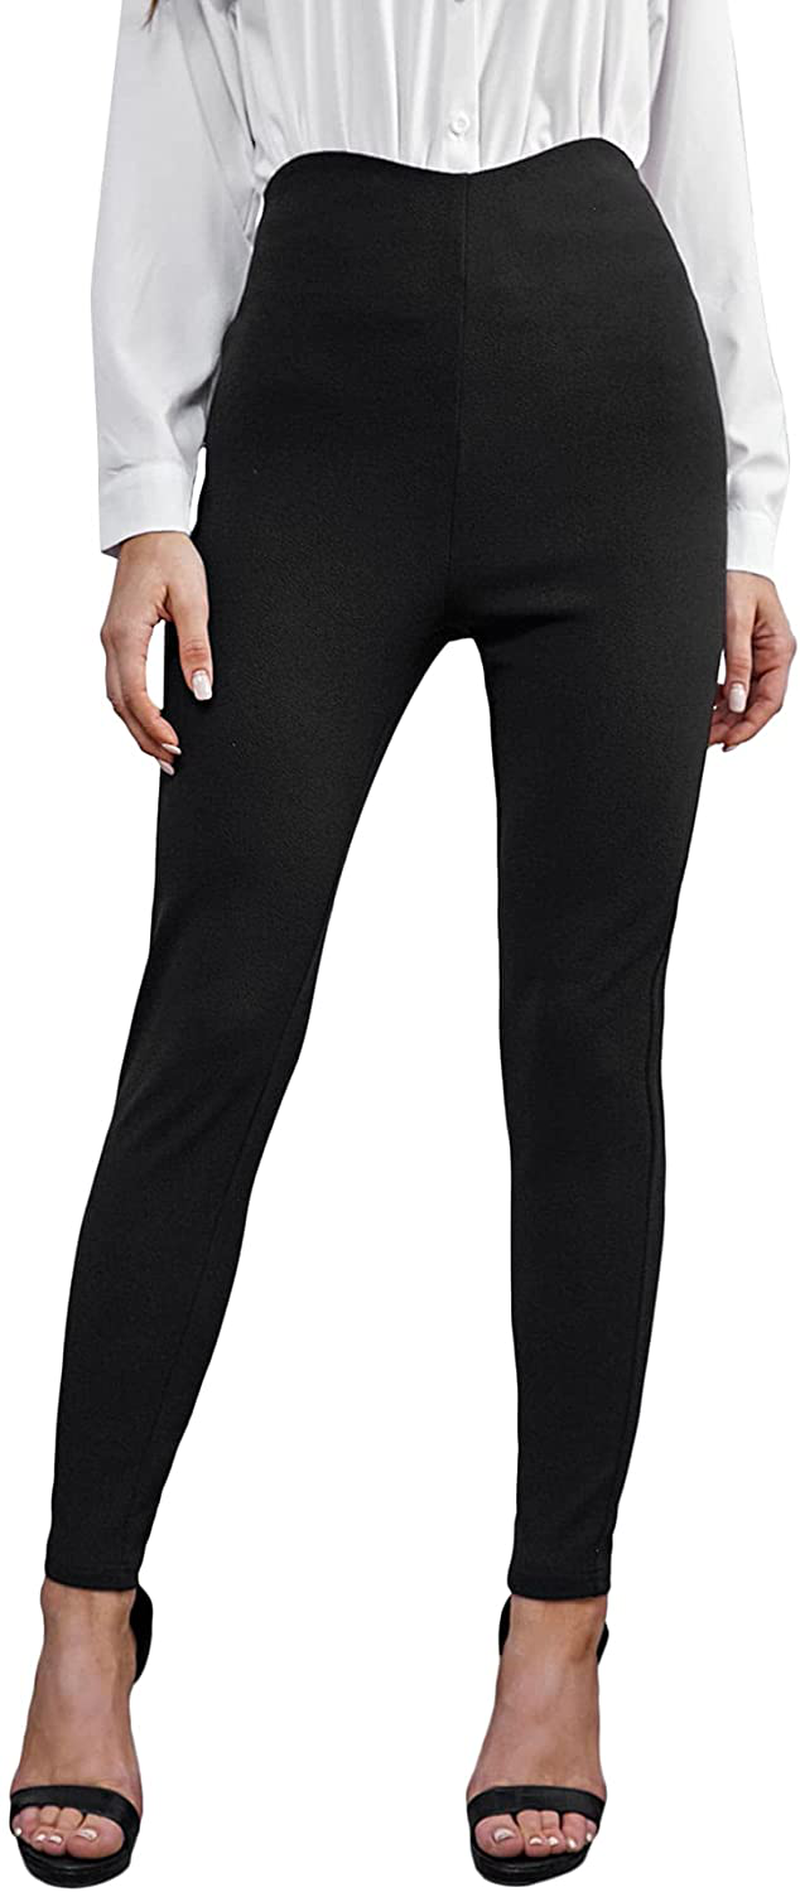 SOLY HUX Women's Pocket Side Elastic High Waist Elegant Trousers Skinny Pants